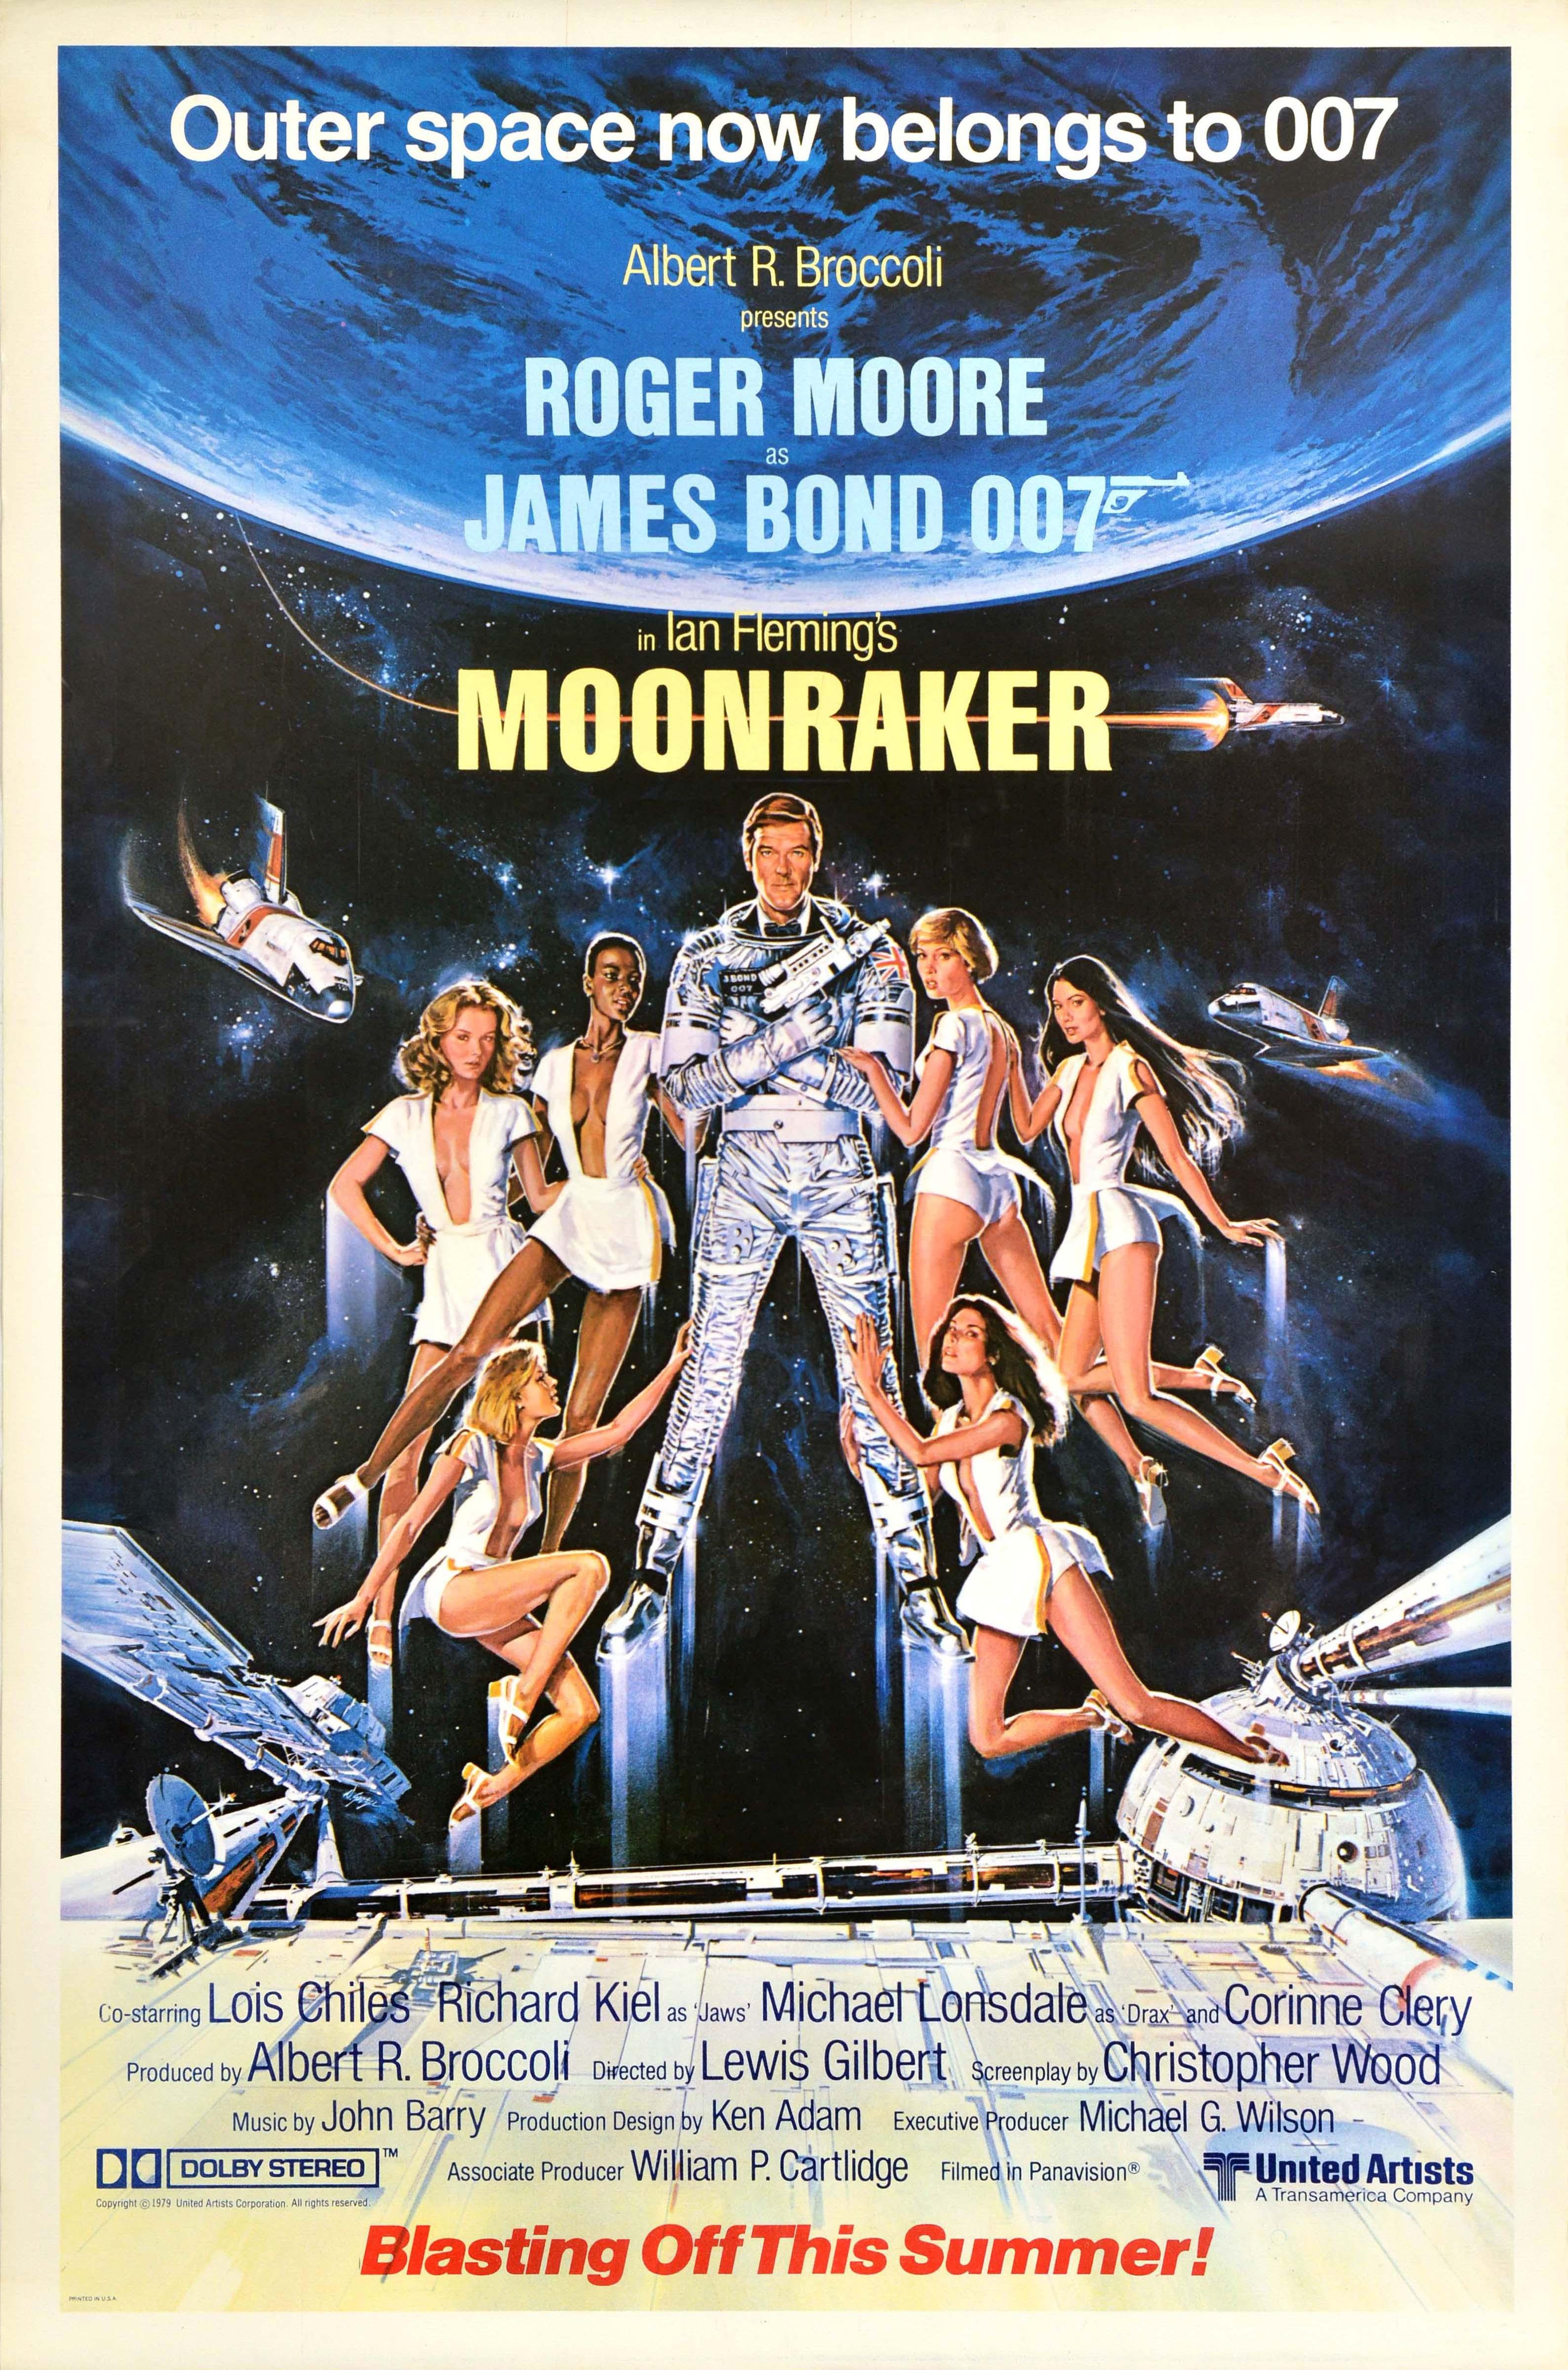 Dan Goozee Print - Original Vintage Teaser Cinema Poster James Bond Moonraker 007 Daniel Goozee